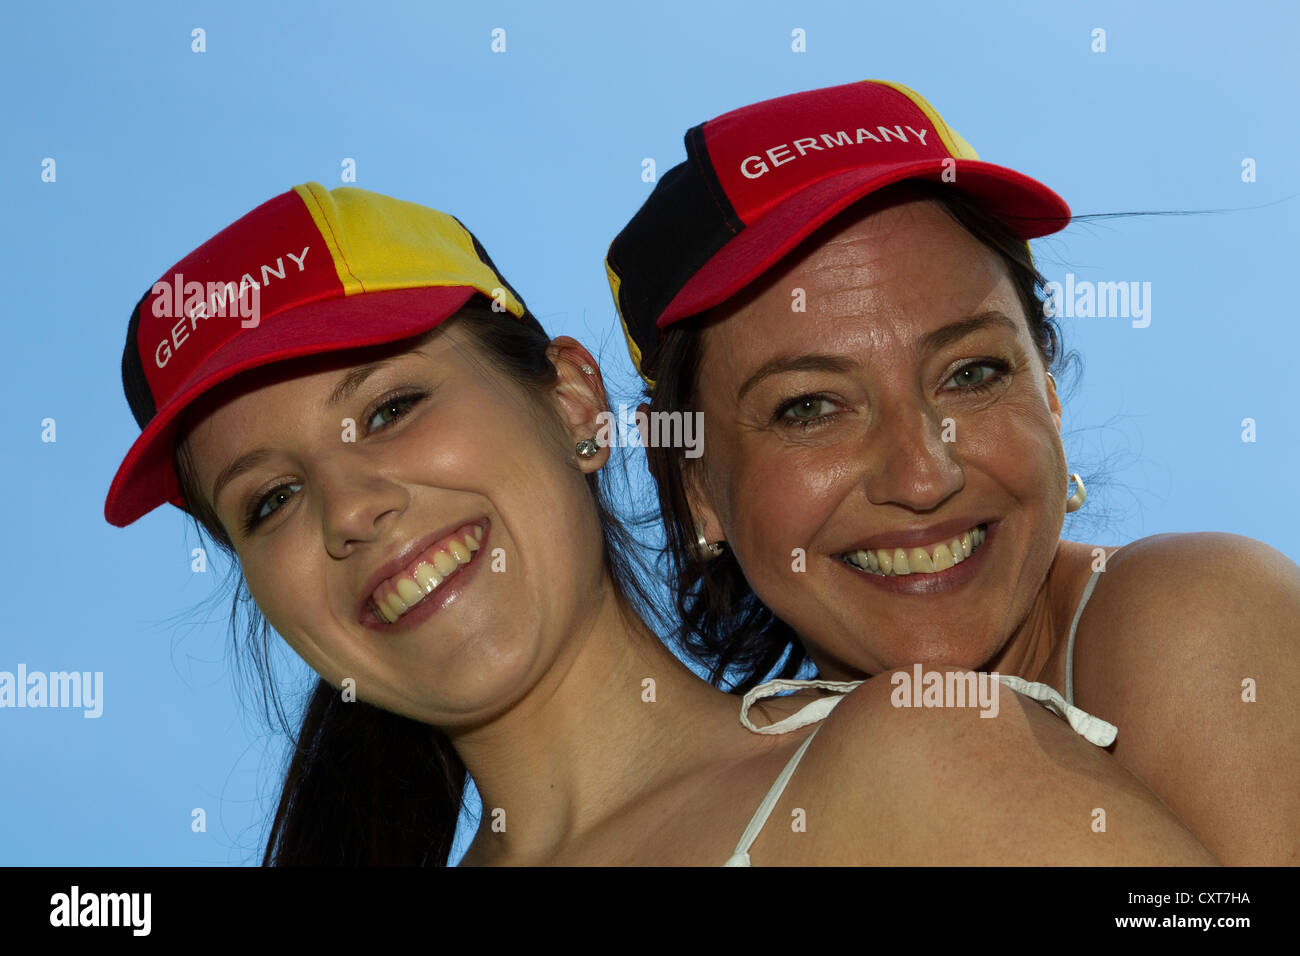 Two women wearing 'Germany' caps, portrait Stock Photo